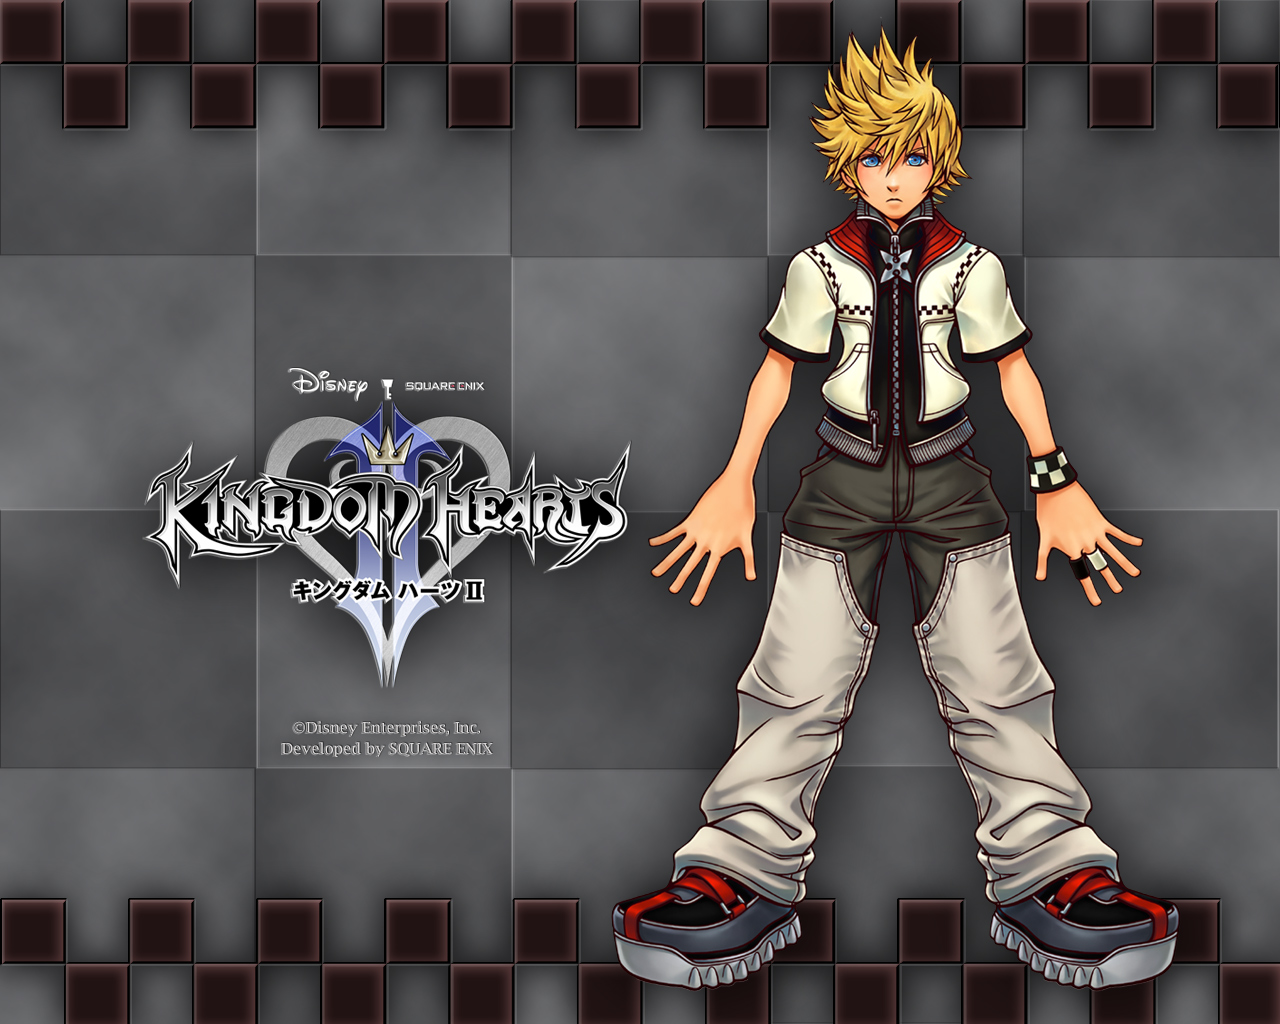 Kingdom-Hearts-2-kingdom-hearts-60340_1280_1024.jpg